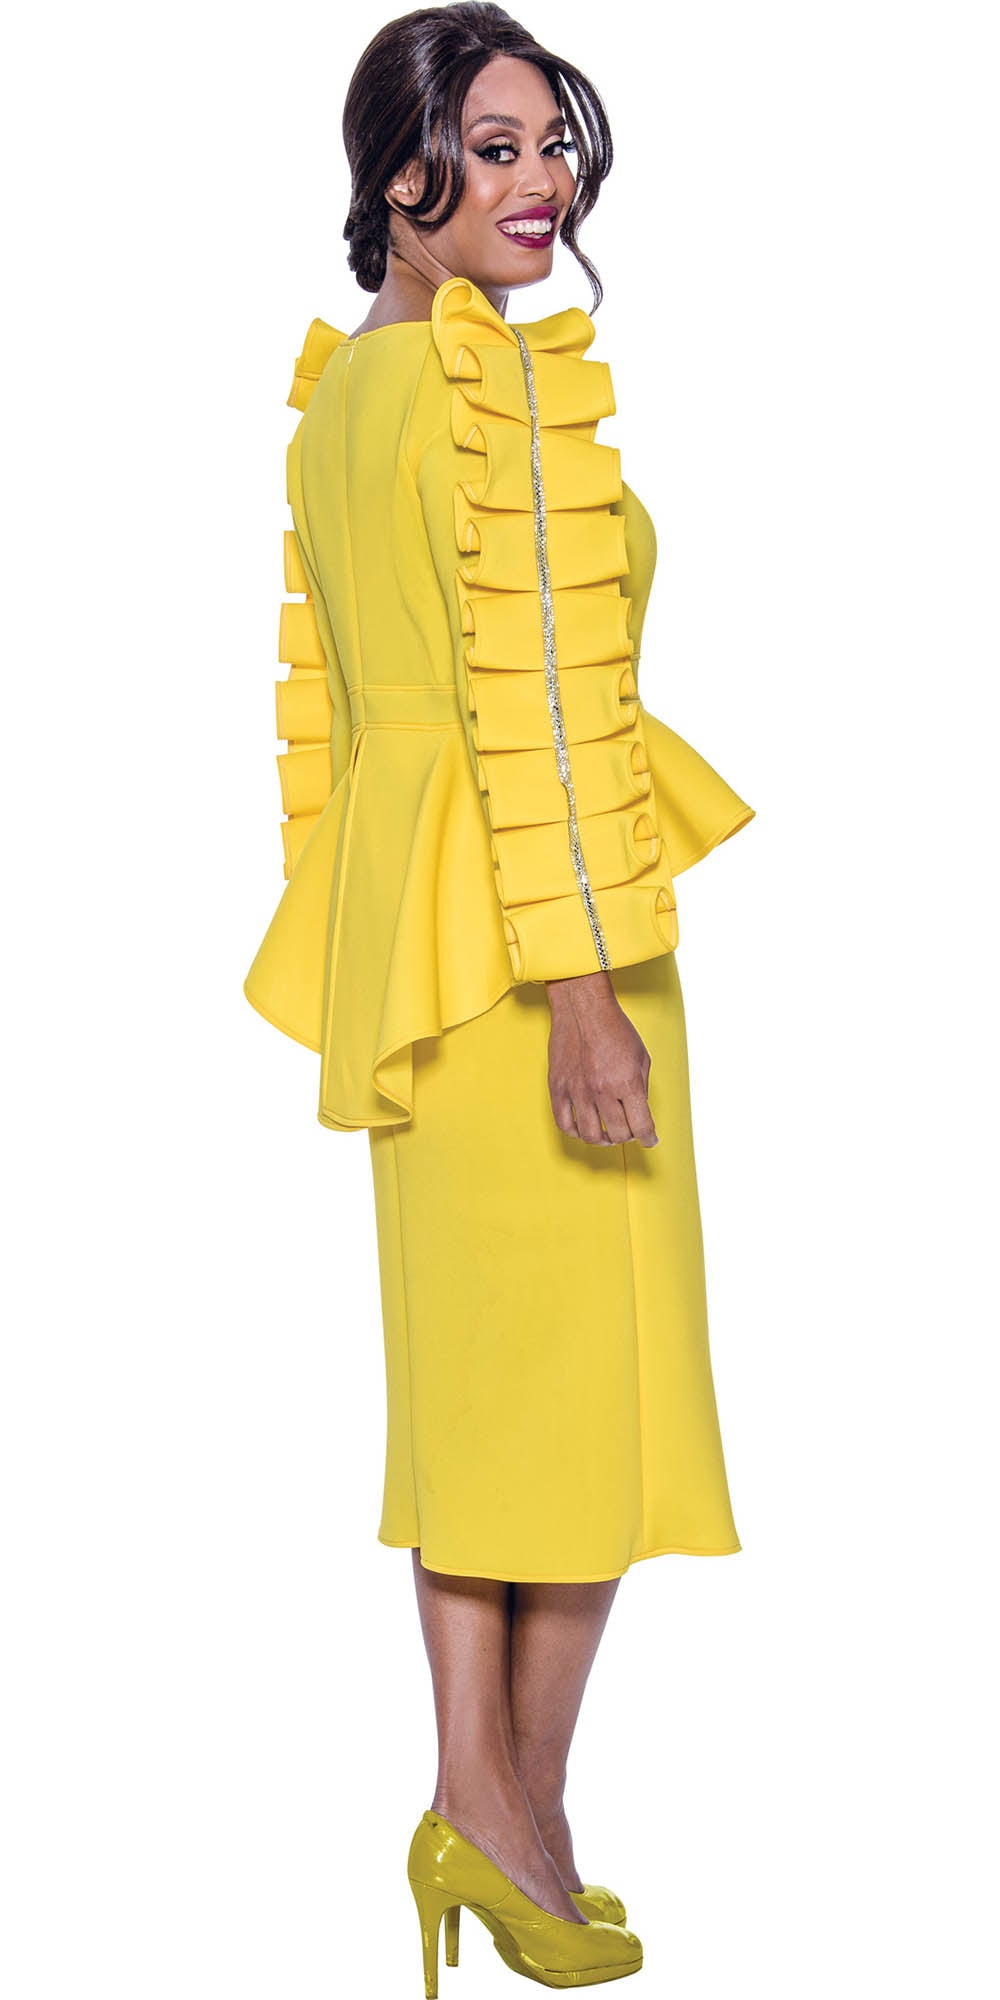 Stellar Looks - 1771 - Yellow - Two-tone Scuba Dress